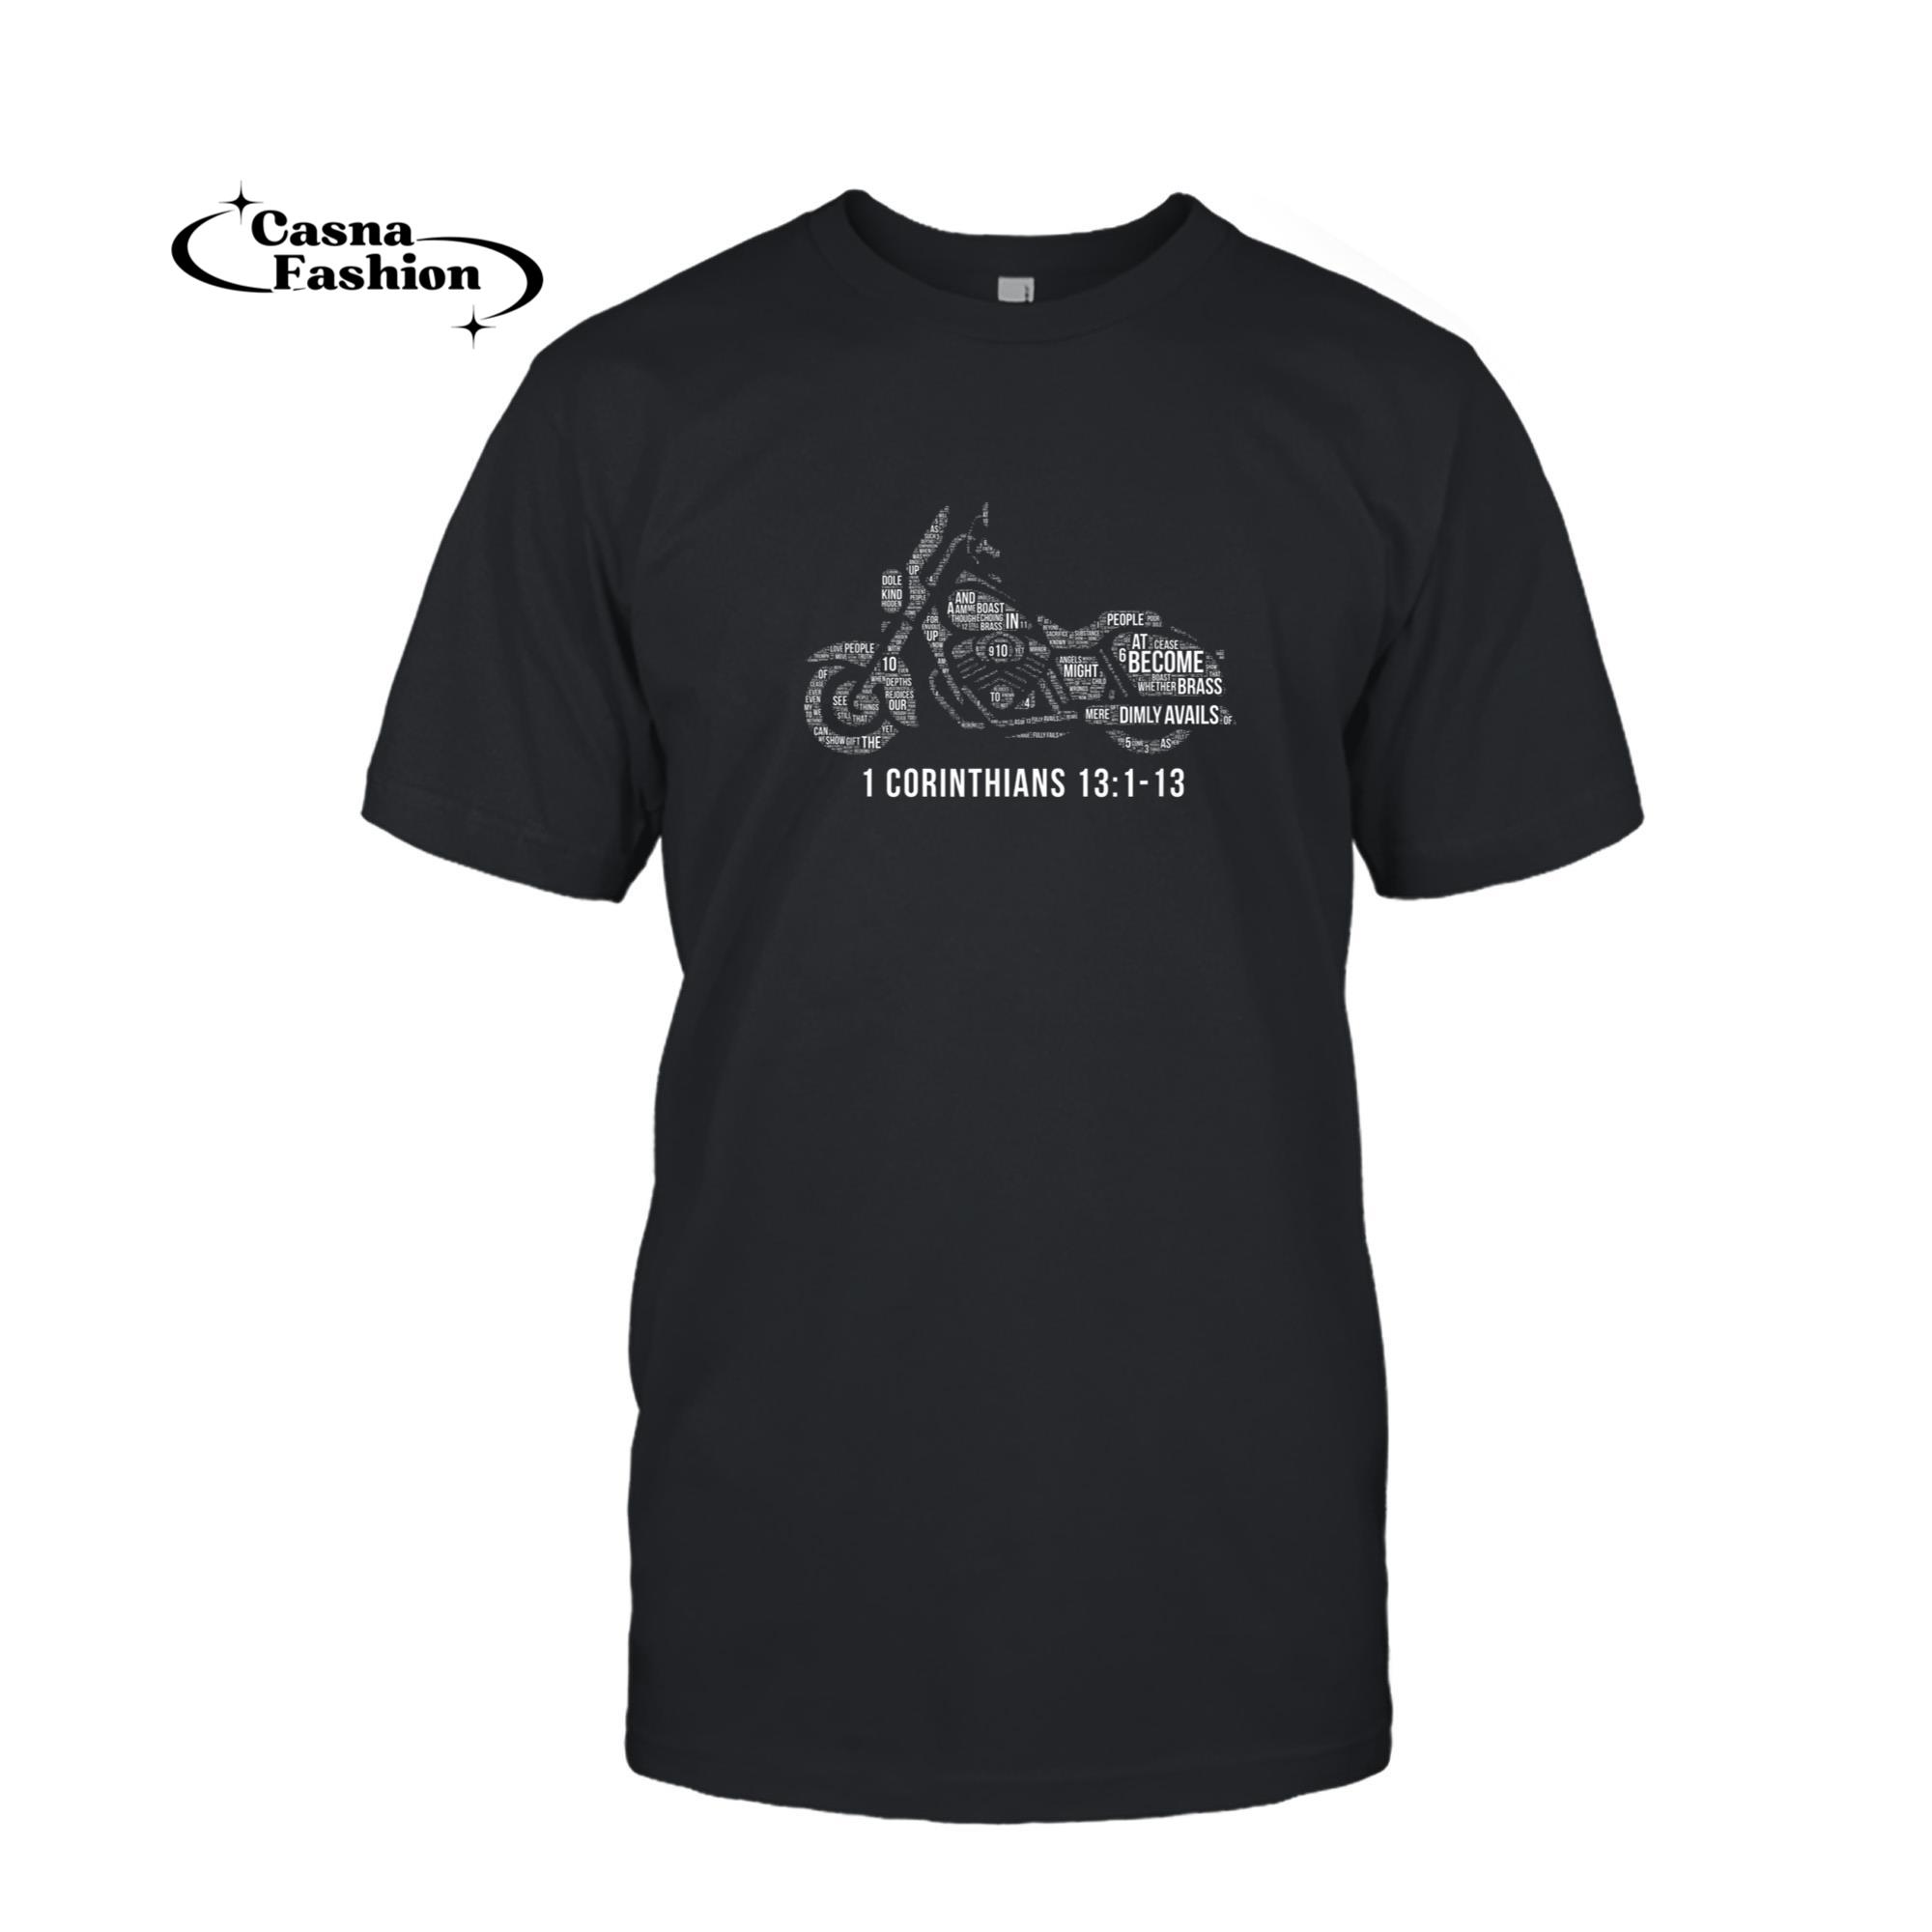 casnafashion_T-shirt_1 Corinthians 13 Christian Biker Christian Motorcycle Gift T-Shirt_T-shirt_Black